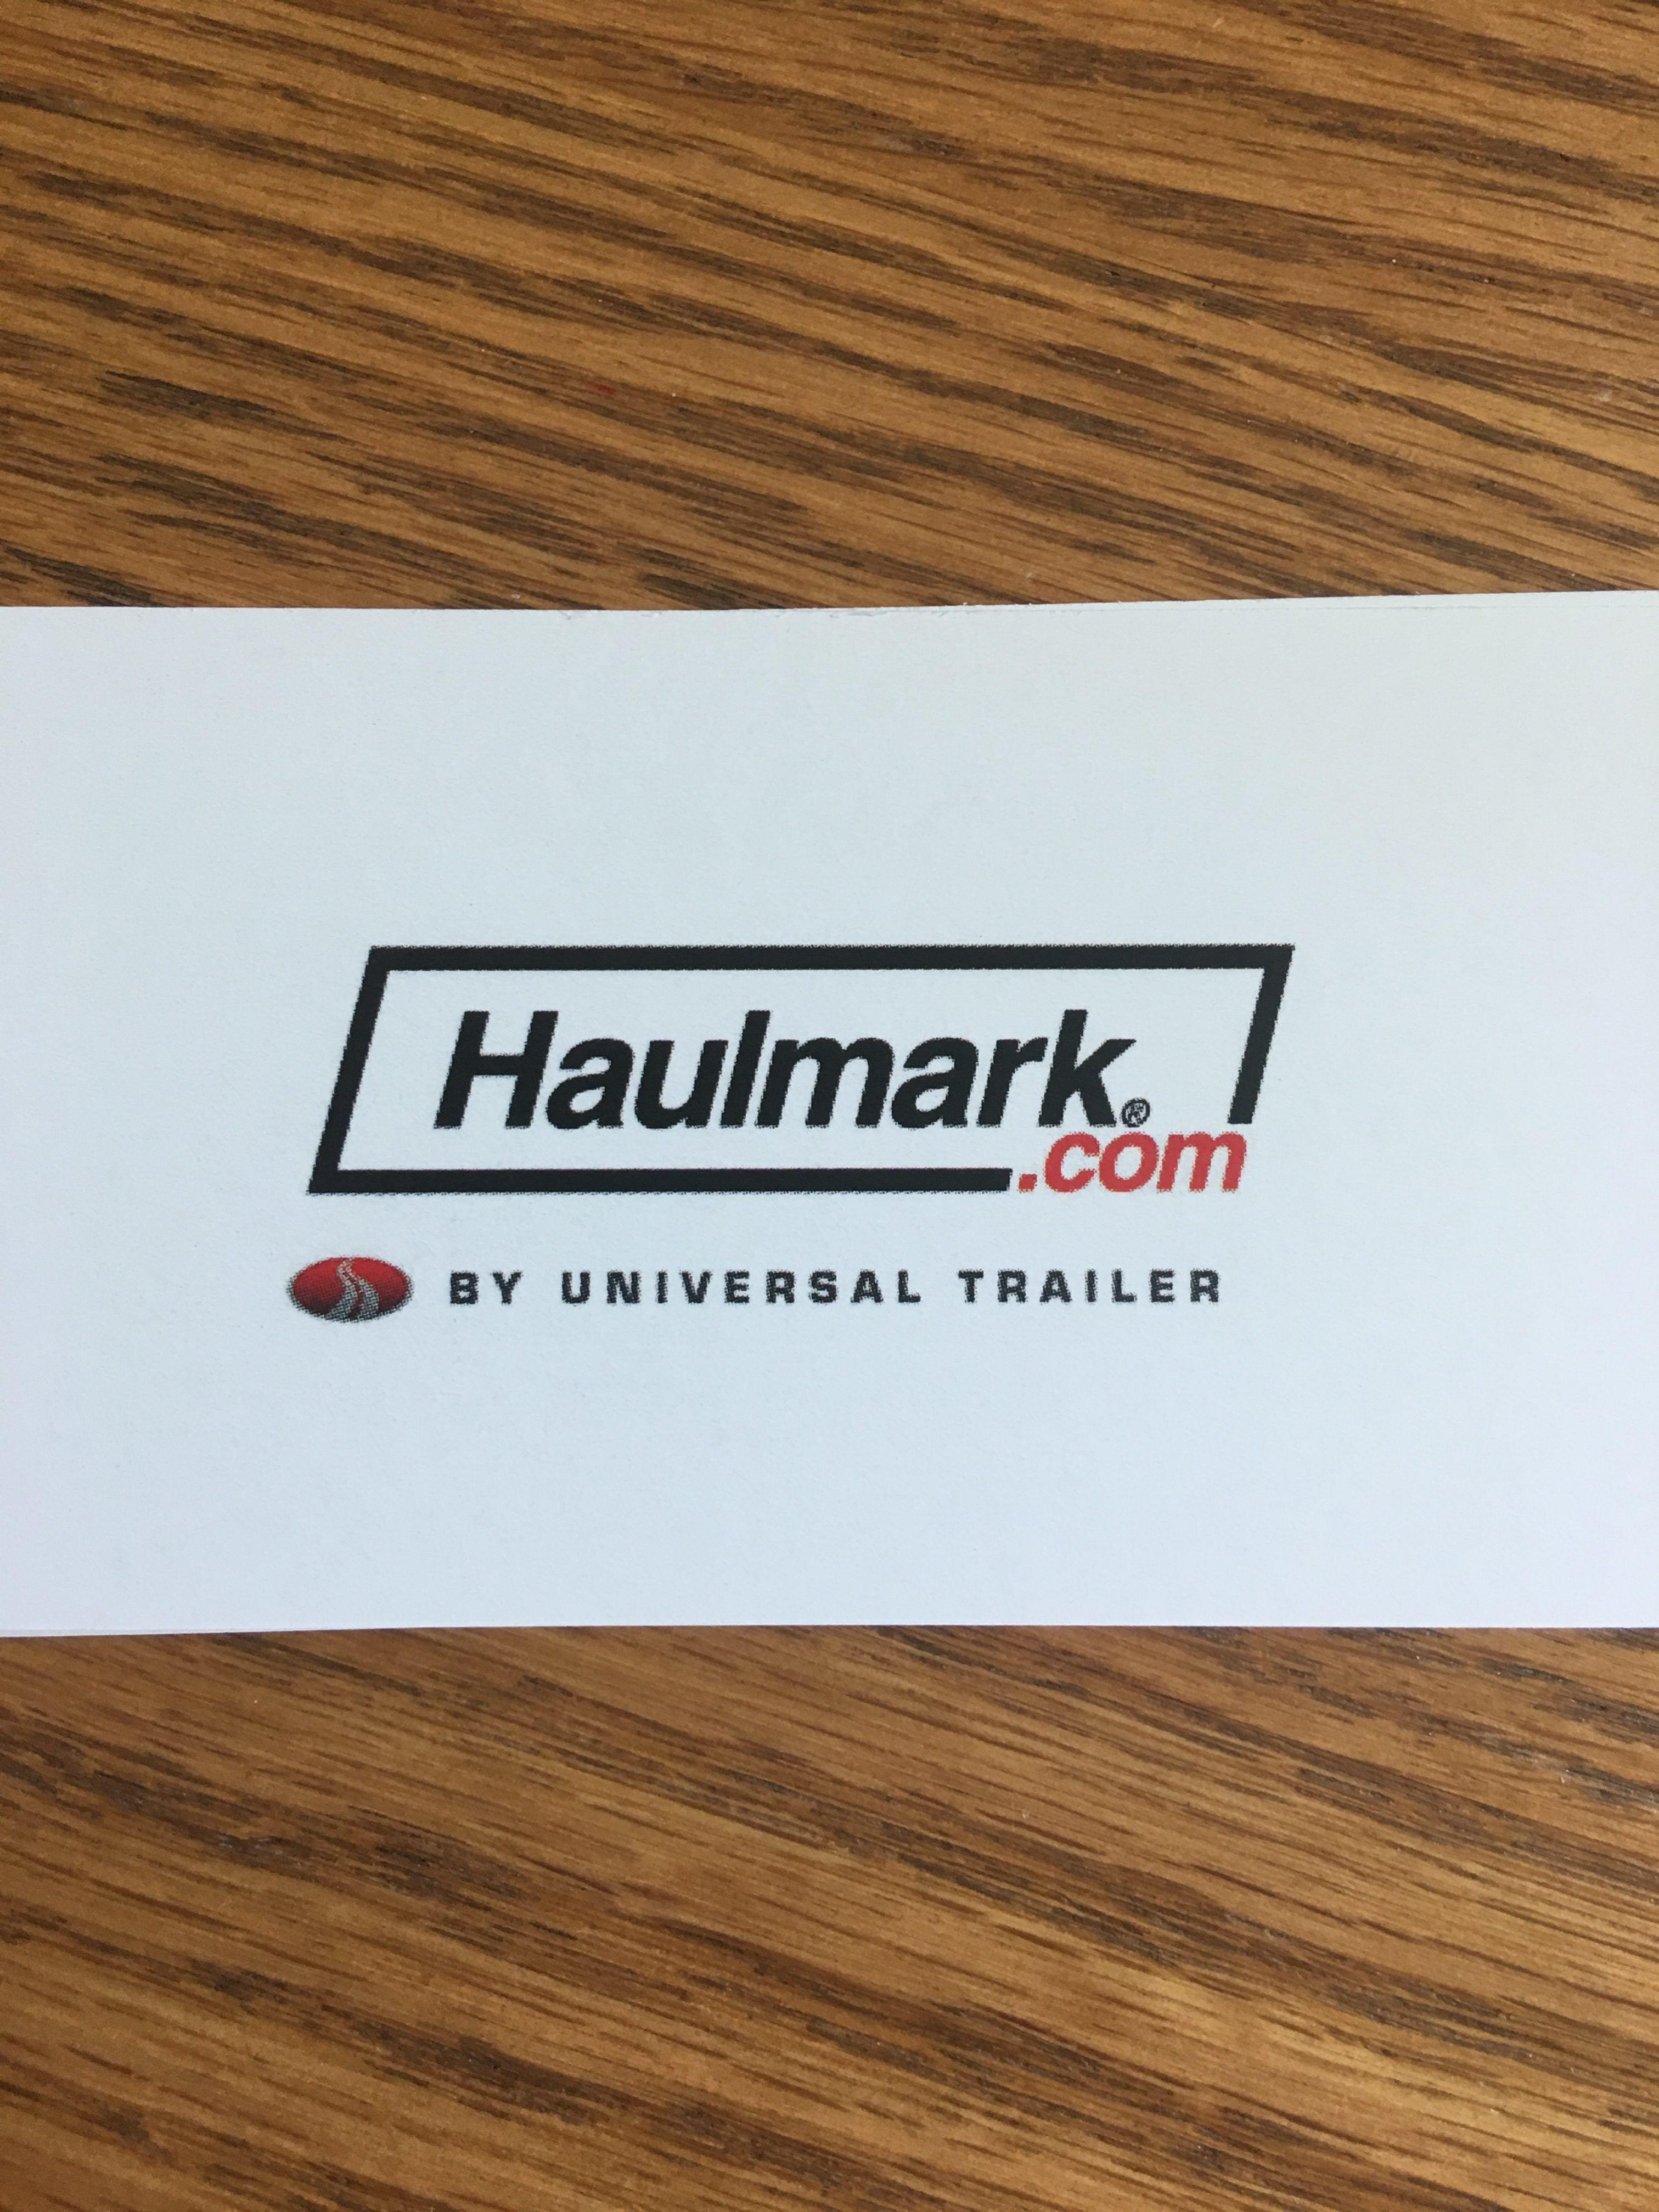 Haulmark Logo - 93southinc.com Wp Content Uploads 2018 08 Photo 20